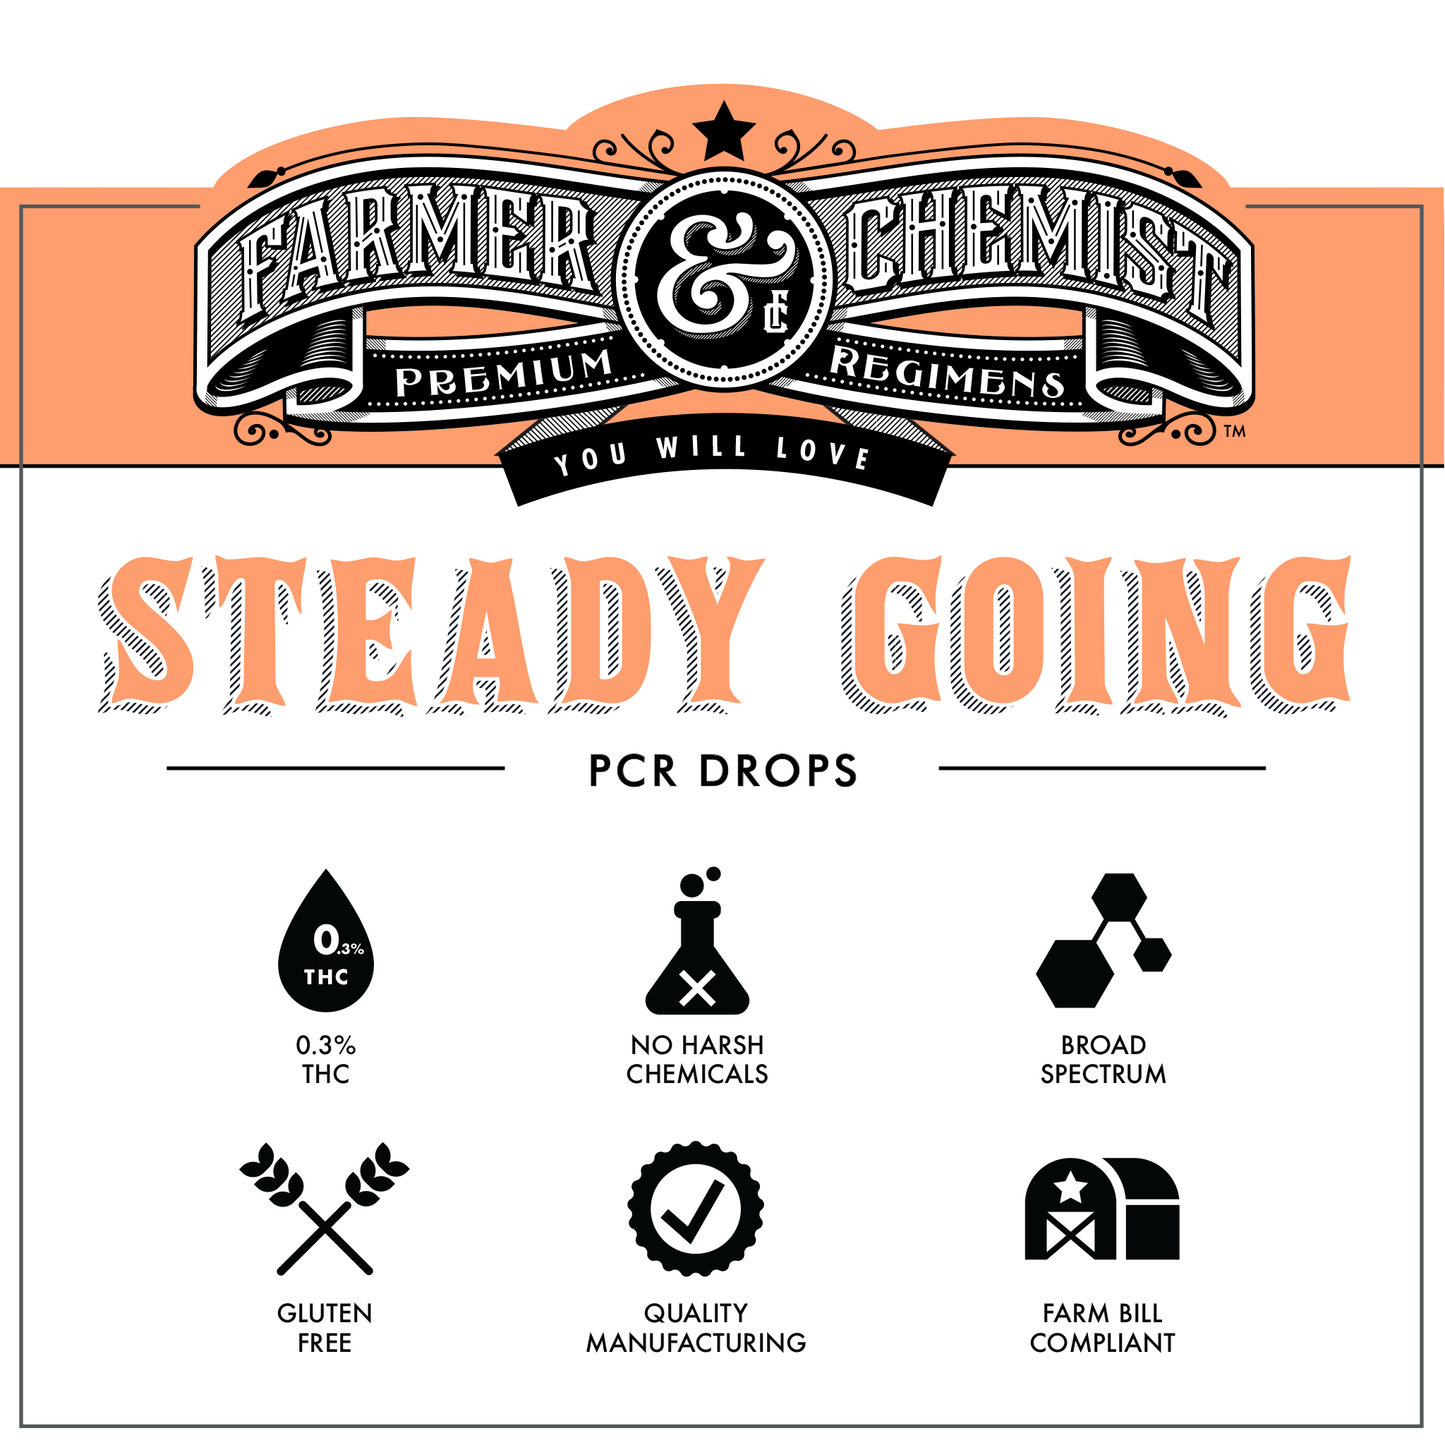 STEADY GOING - Orange You Happy 1500 mg CBD/300 mg CBG PCR-Tinktur